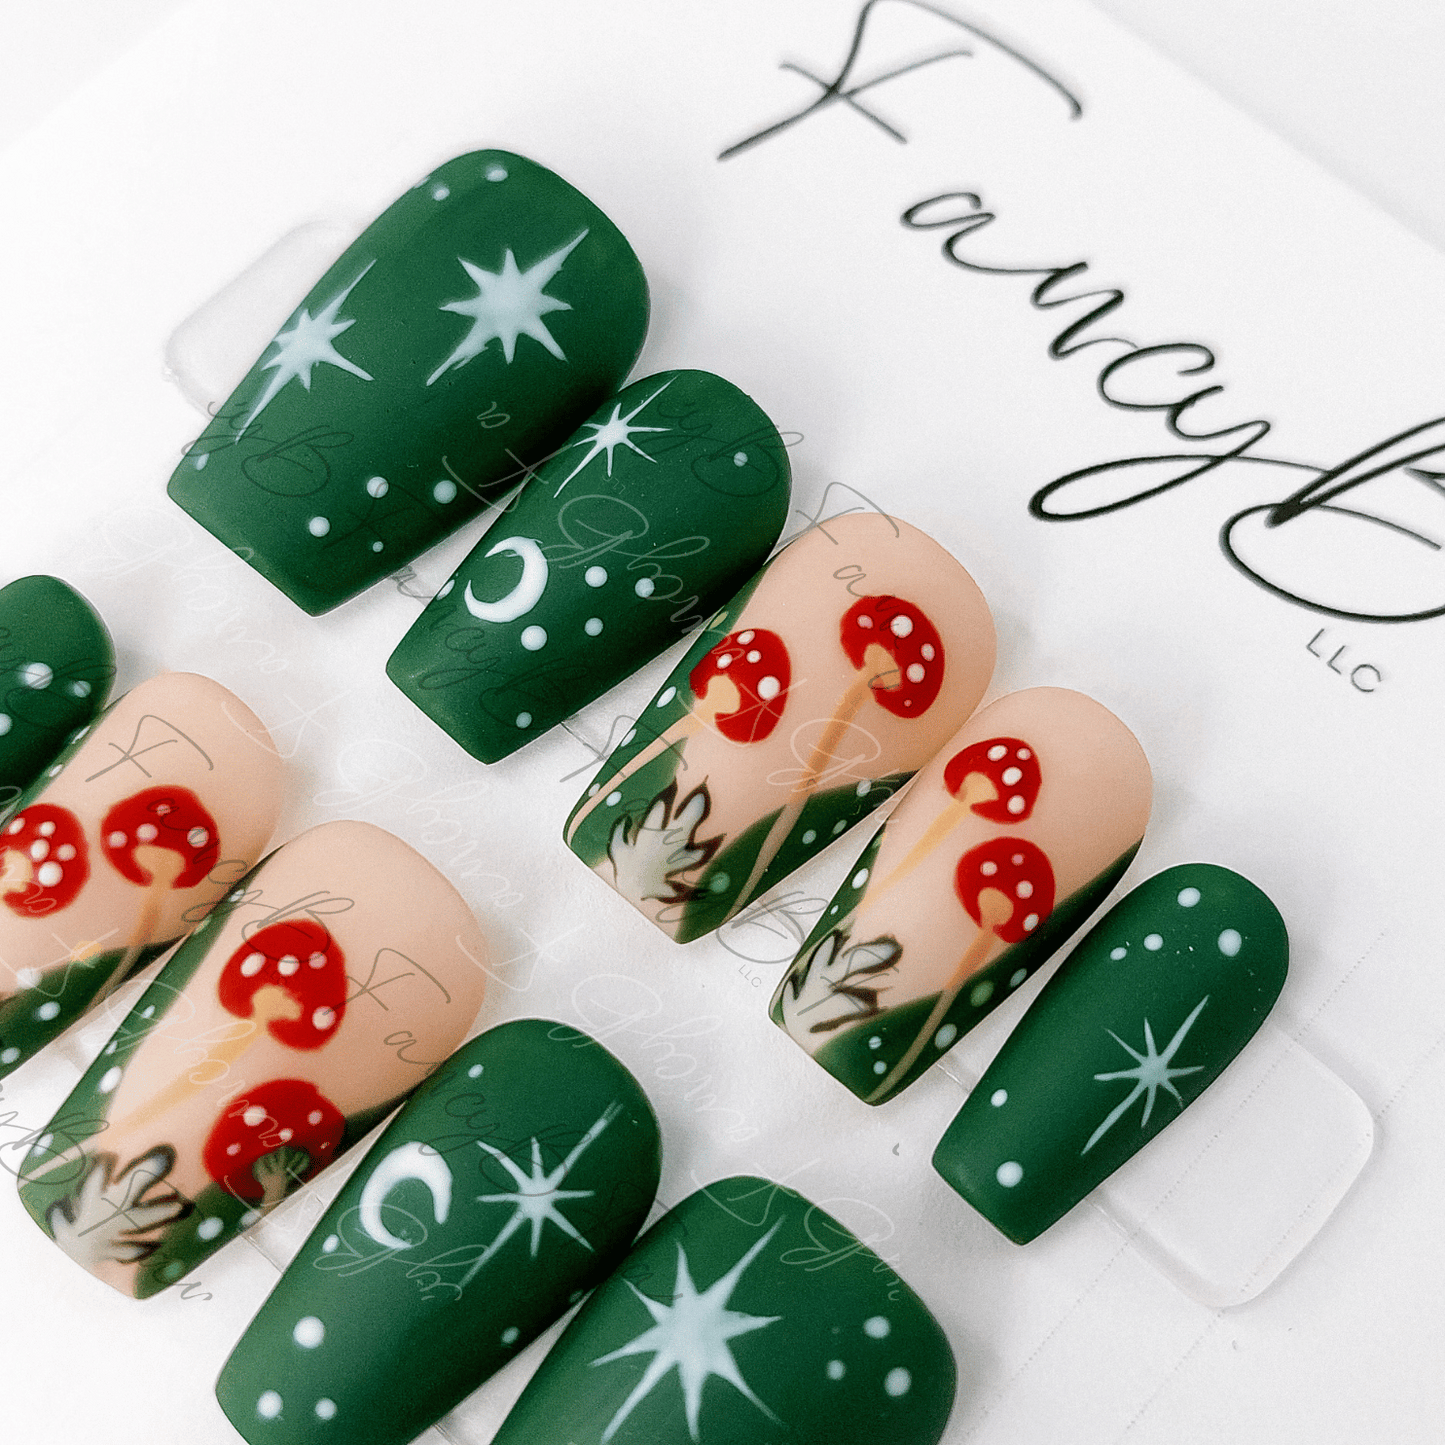 Custom press on nails mushroom leafy nails with green celestial designs. FancyB Nails.